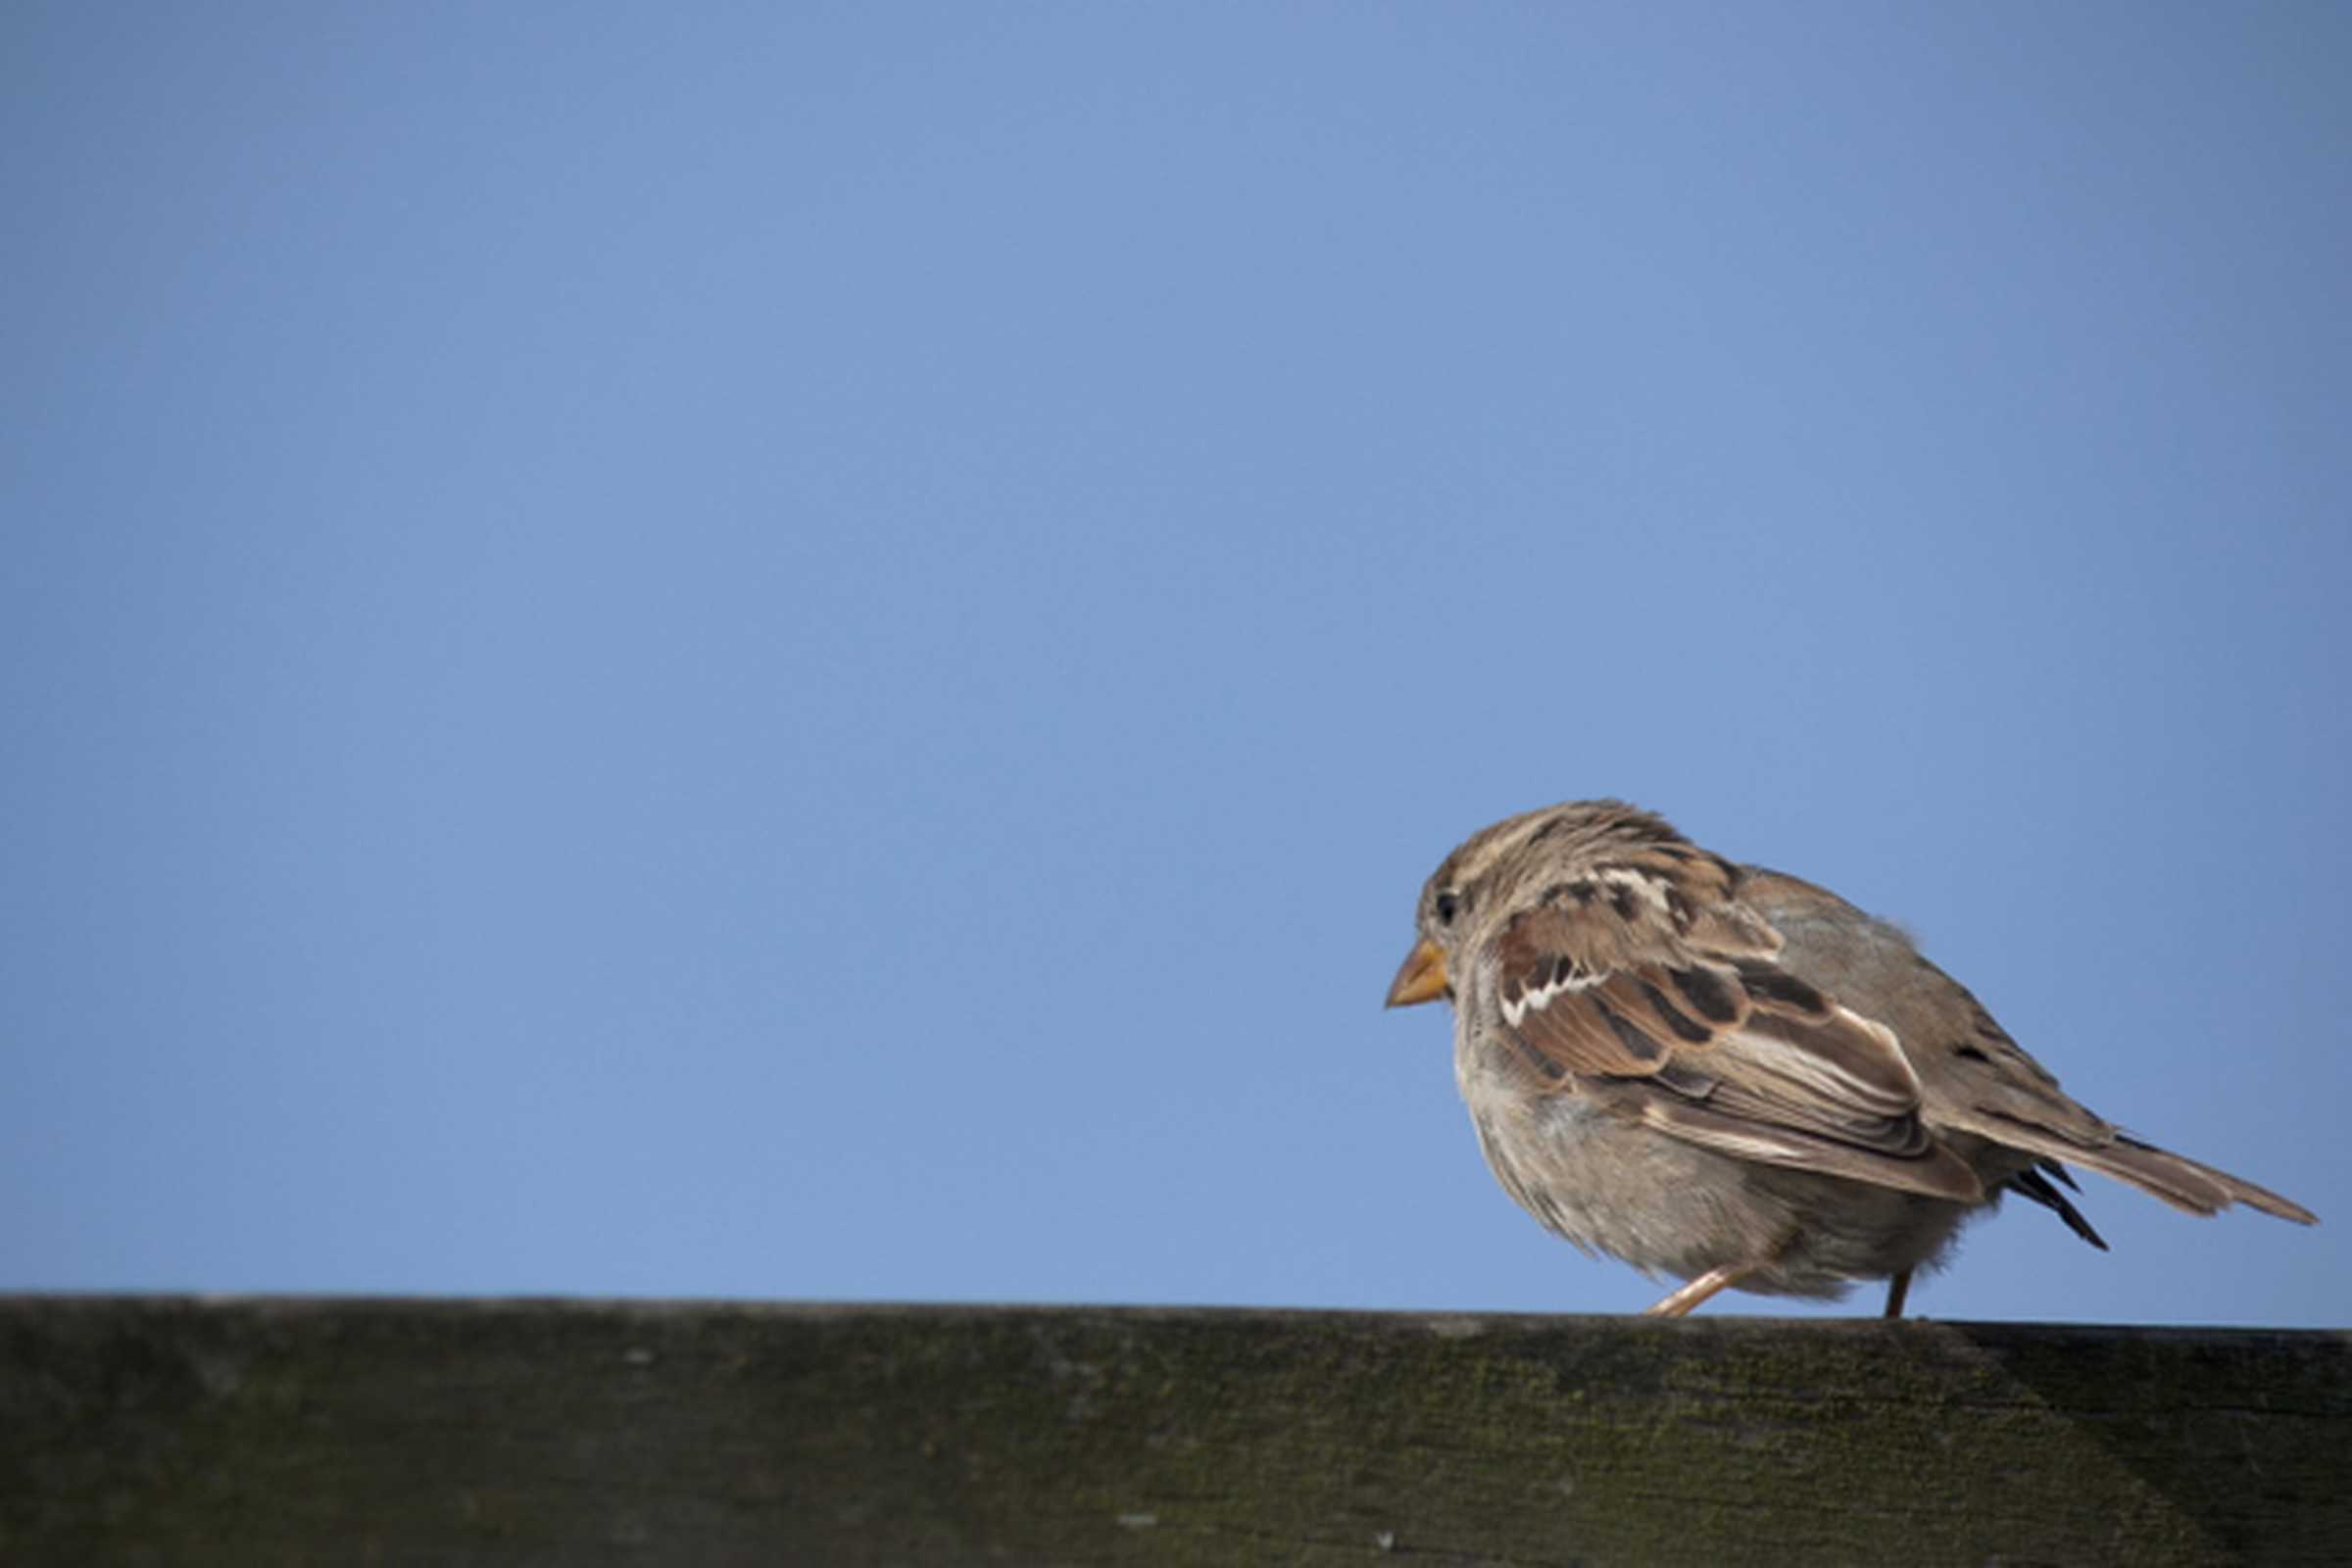 sparrow from kittysphotos on flickr